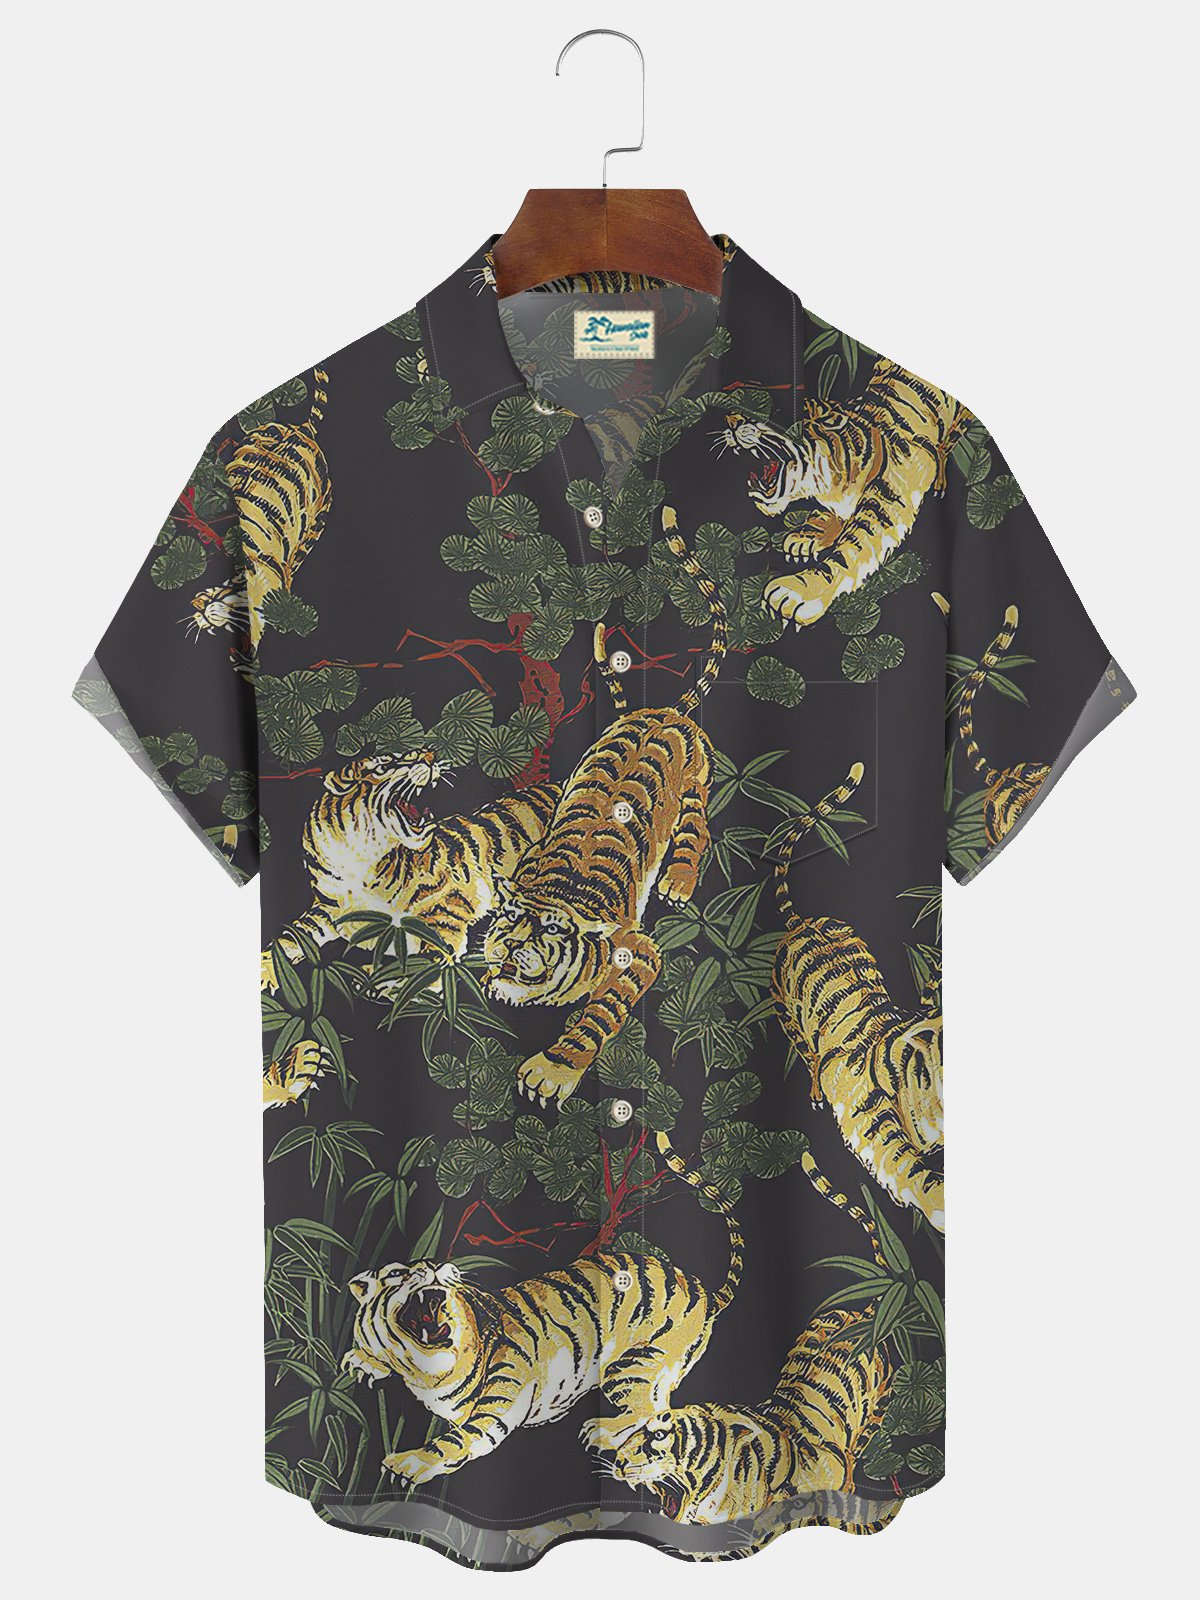 Royaura  Botanical tiger Print Beach Men's Hawaiian  Shirt with Pockets